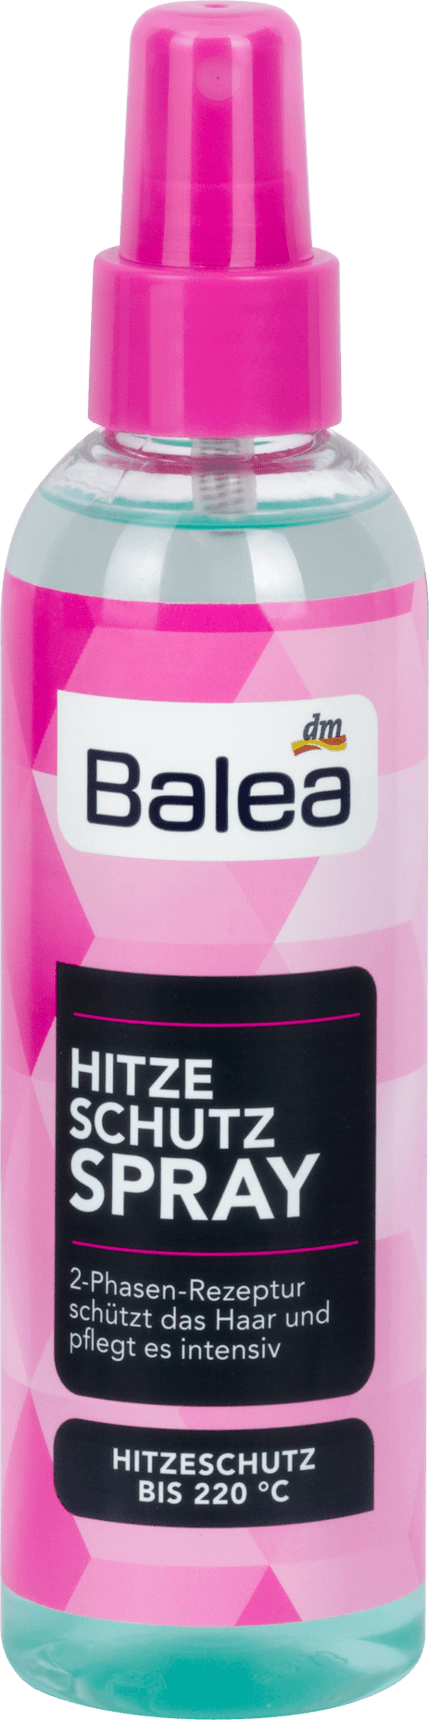 Balea Hővédő spray kétfázisú, 200 ml